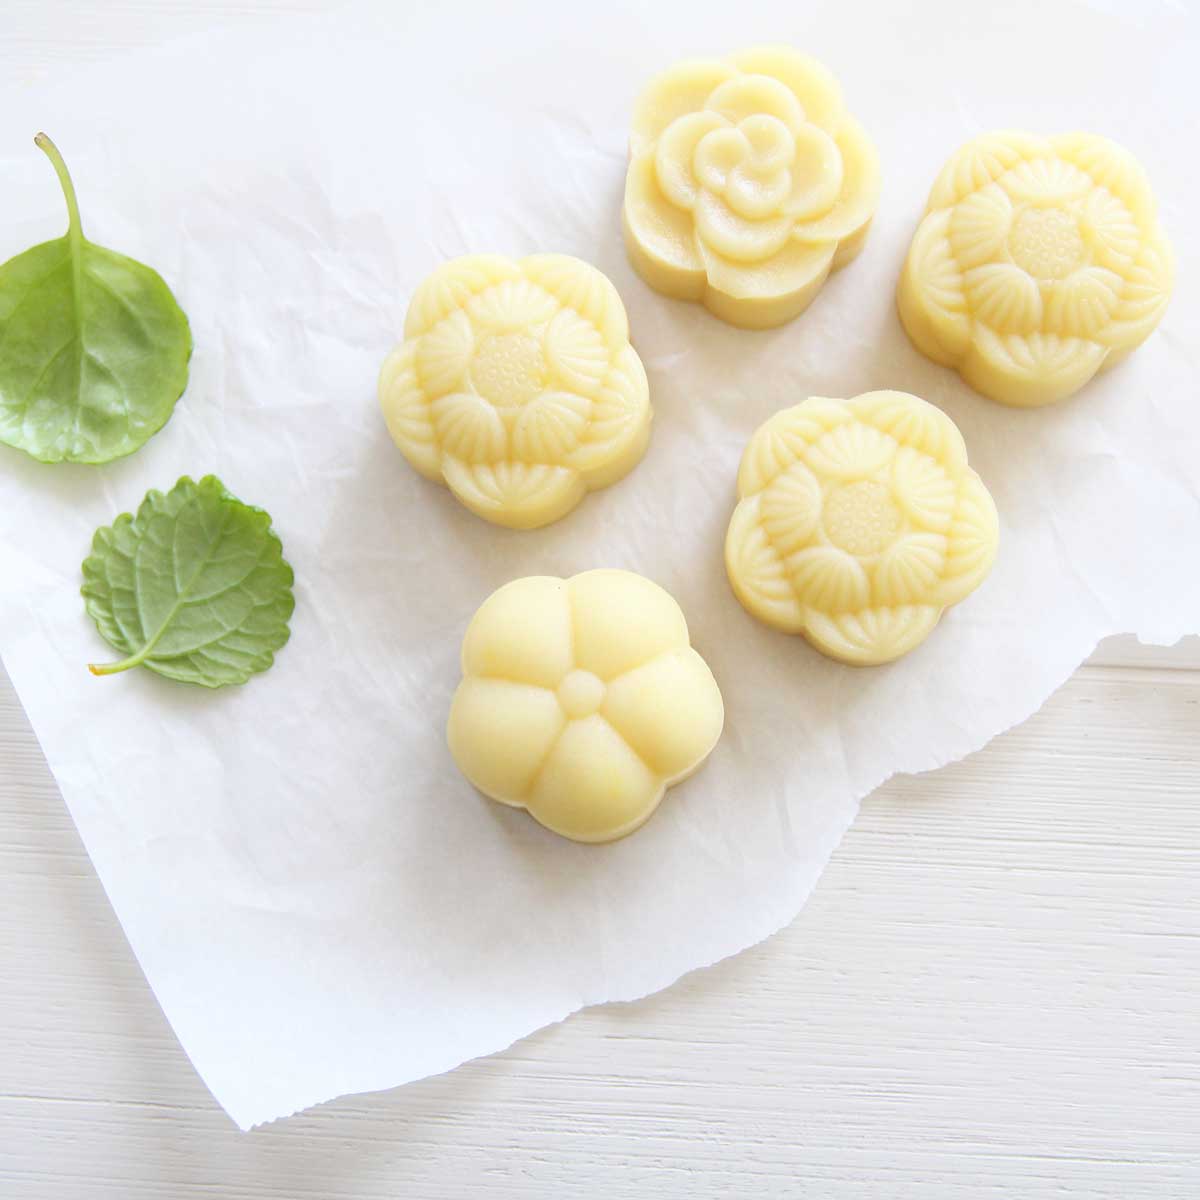 Homemade Durian Snow Skin Mooncakes with Mung Bean Filling - Lemon Whipped Cream